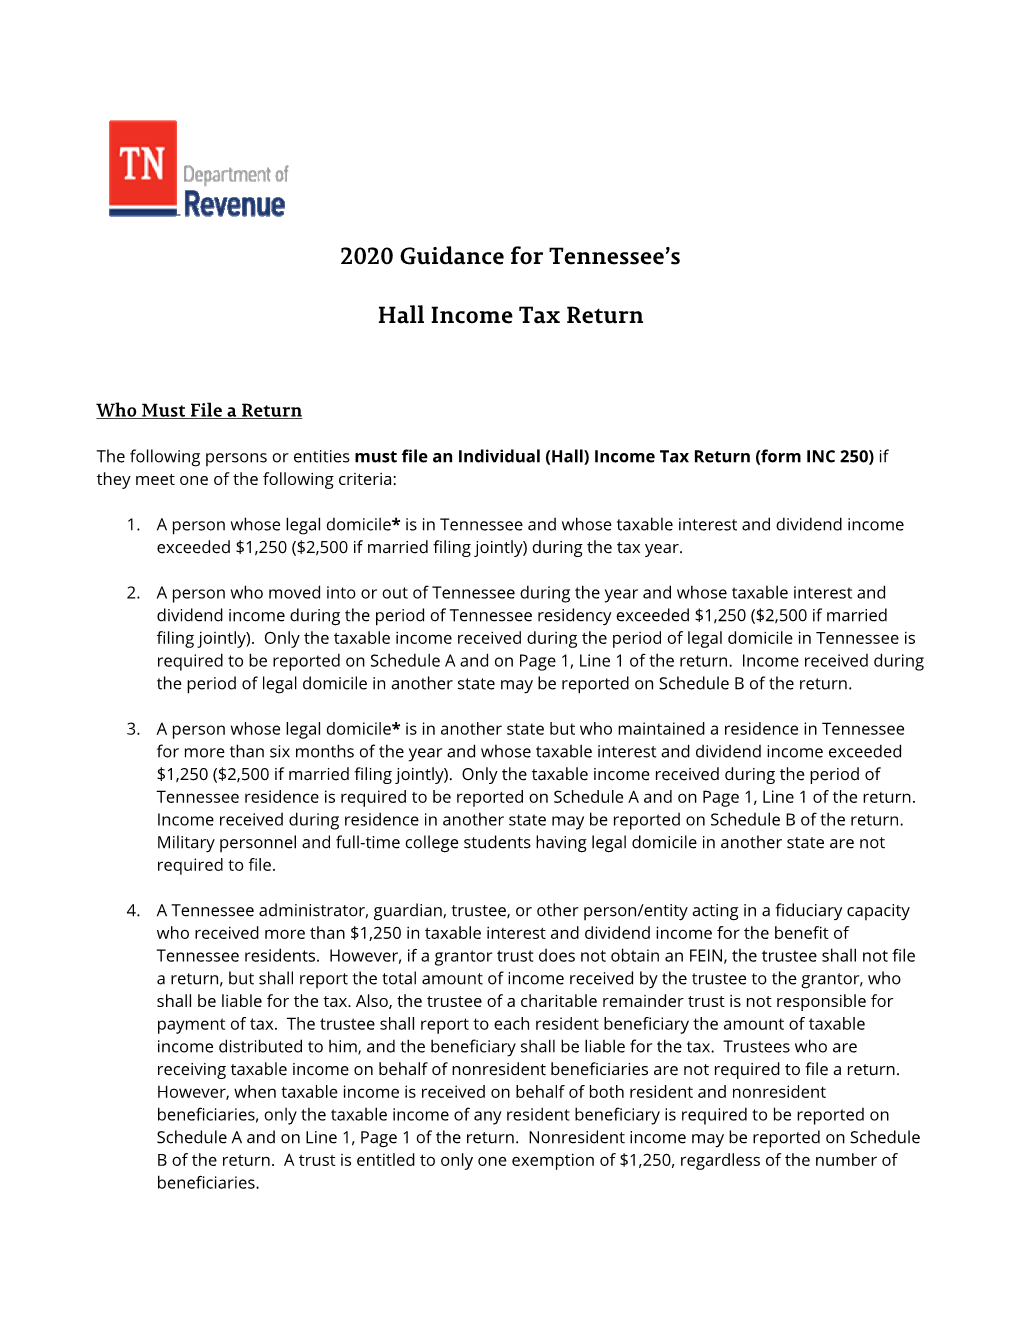 Hall Income Tax Guide